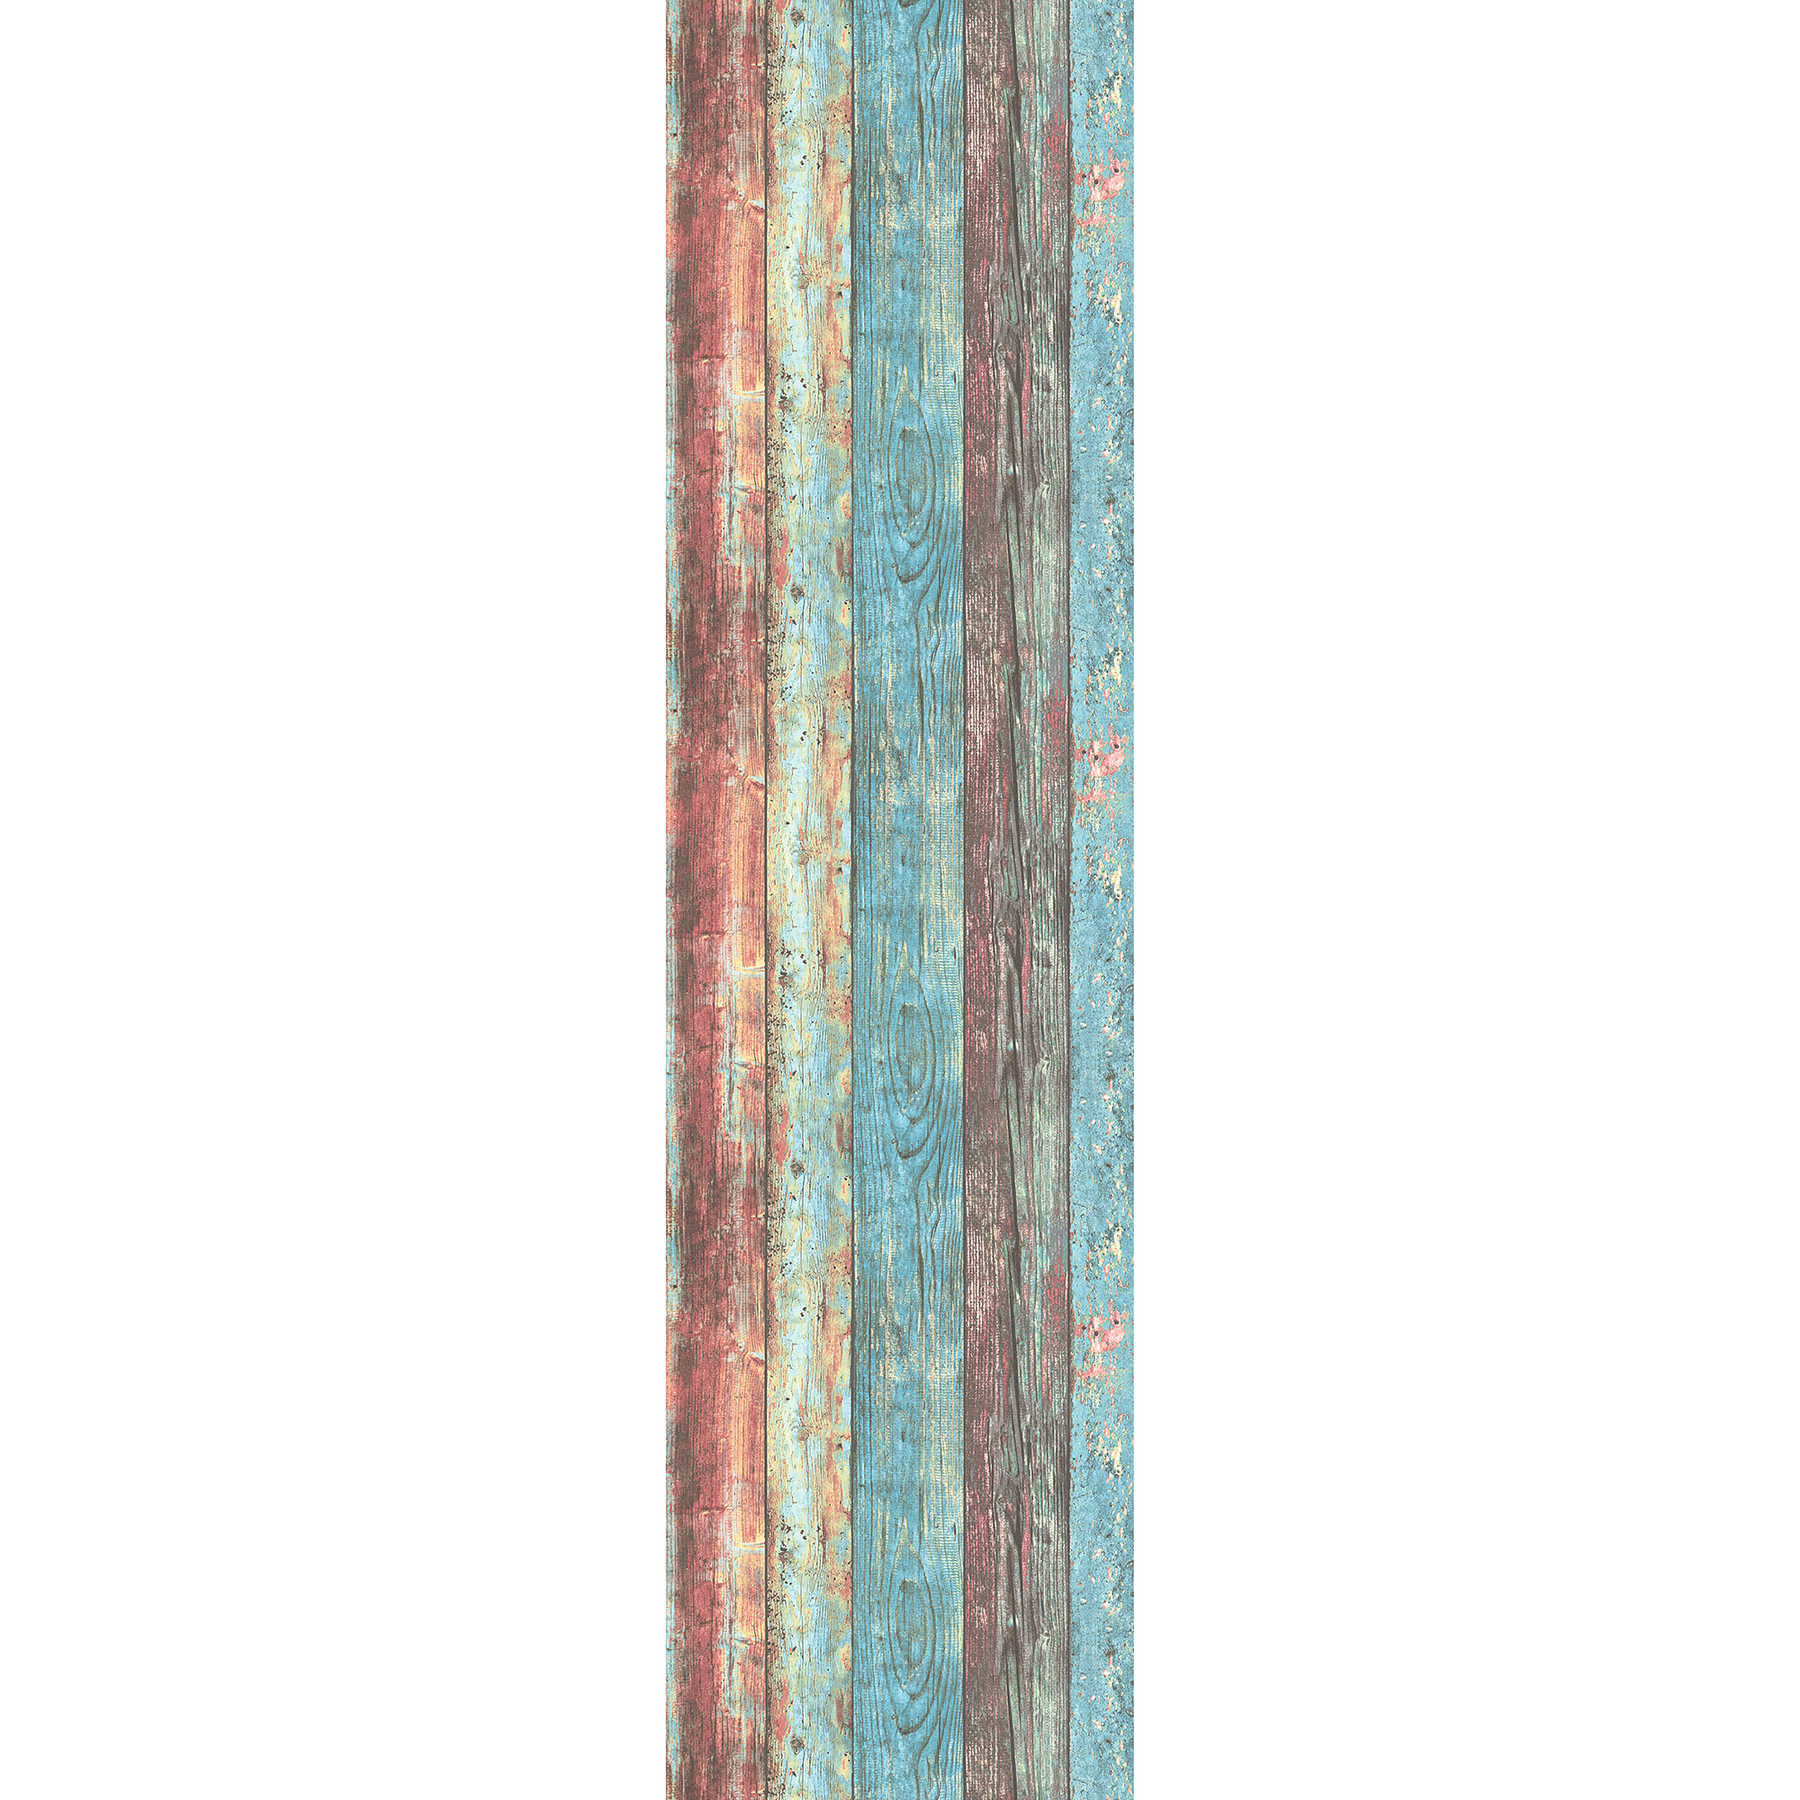         Papel pintado Shabby Chic aspecto madera usada - multicolor
    